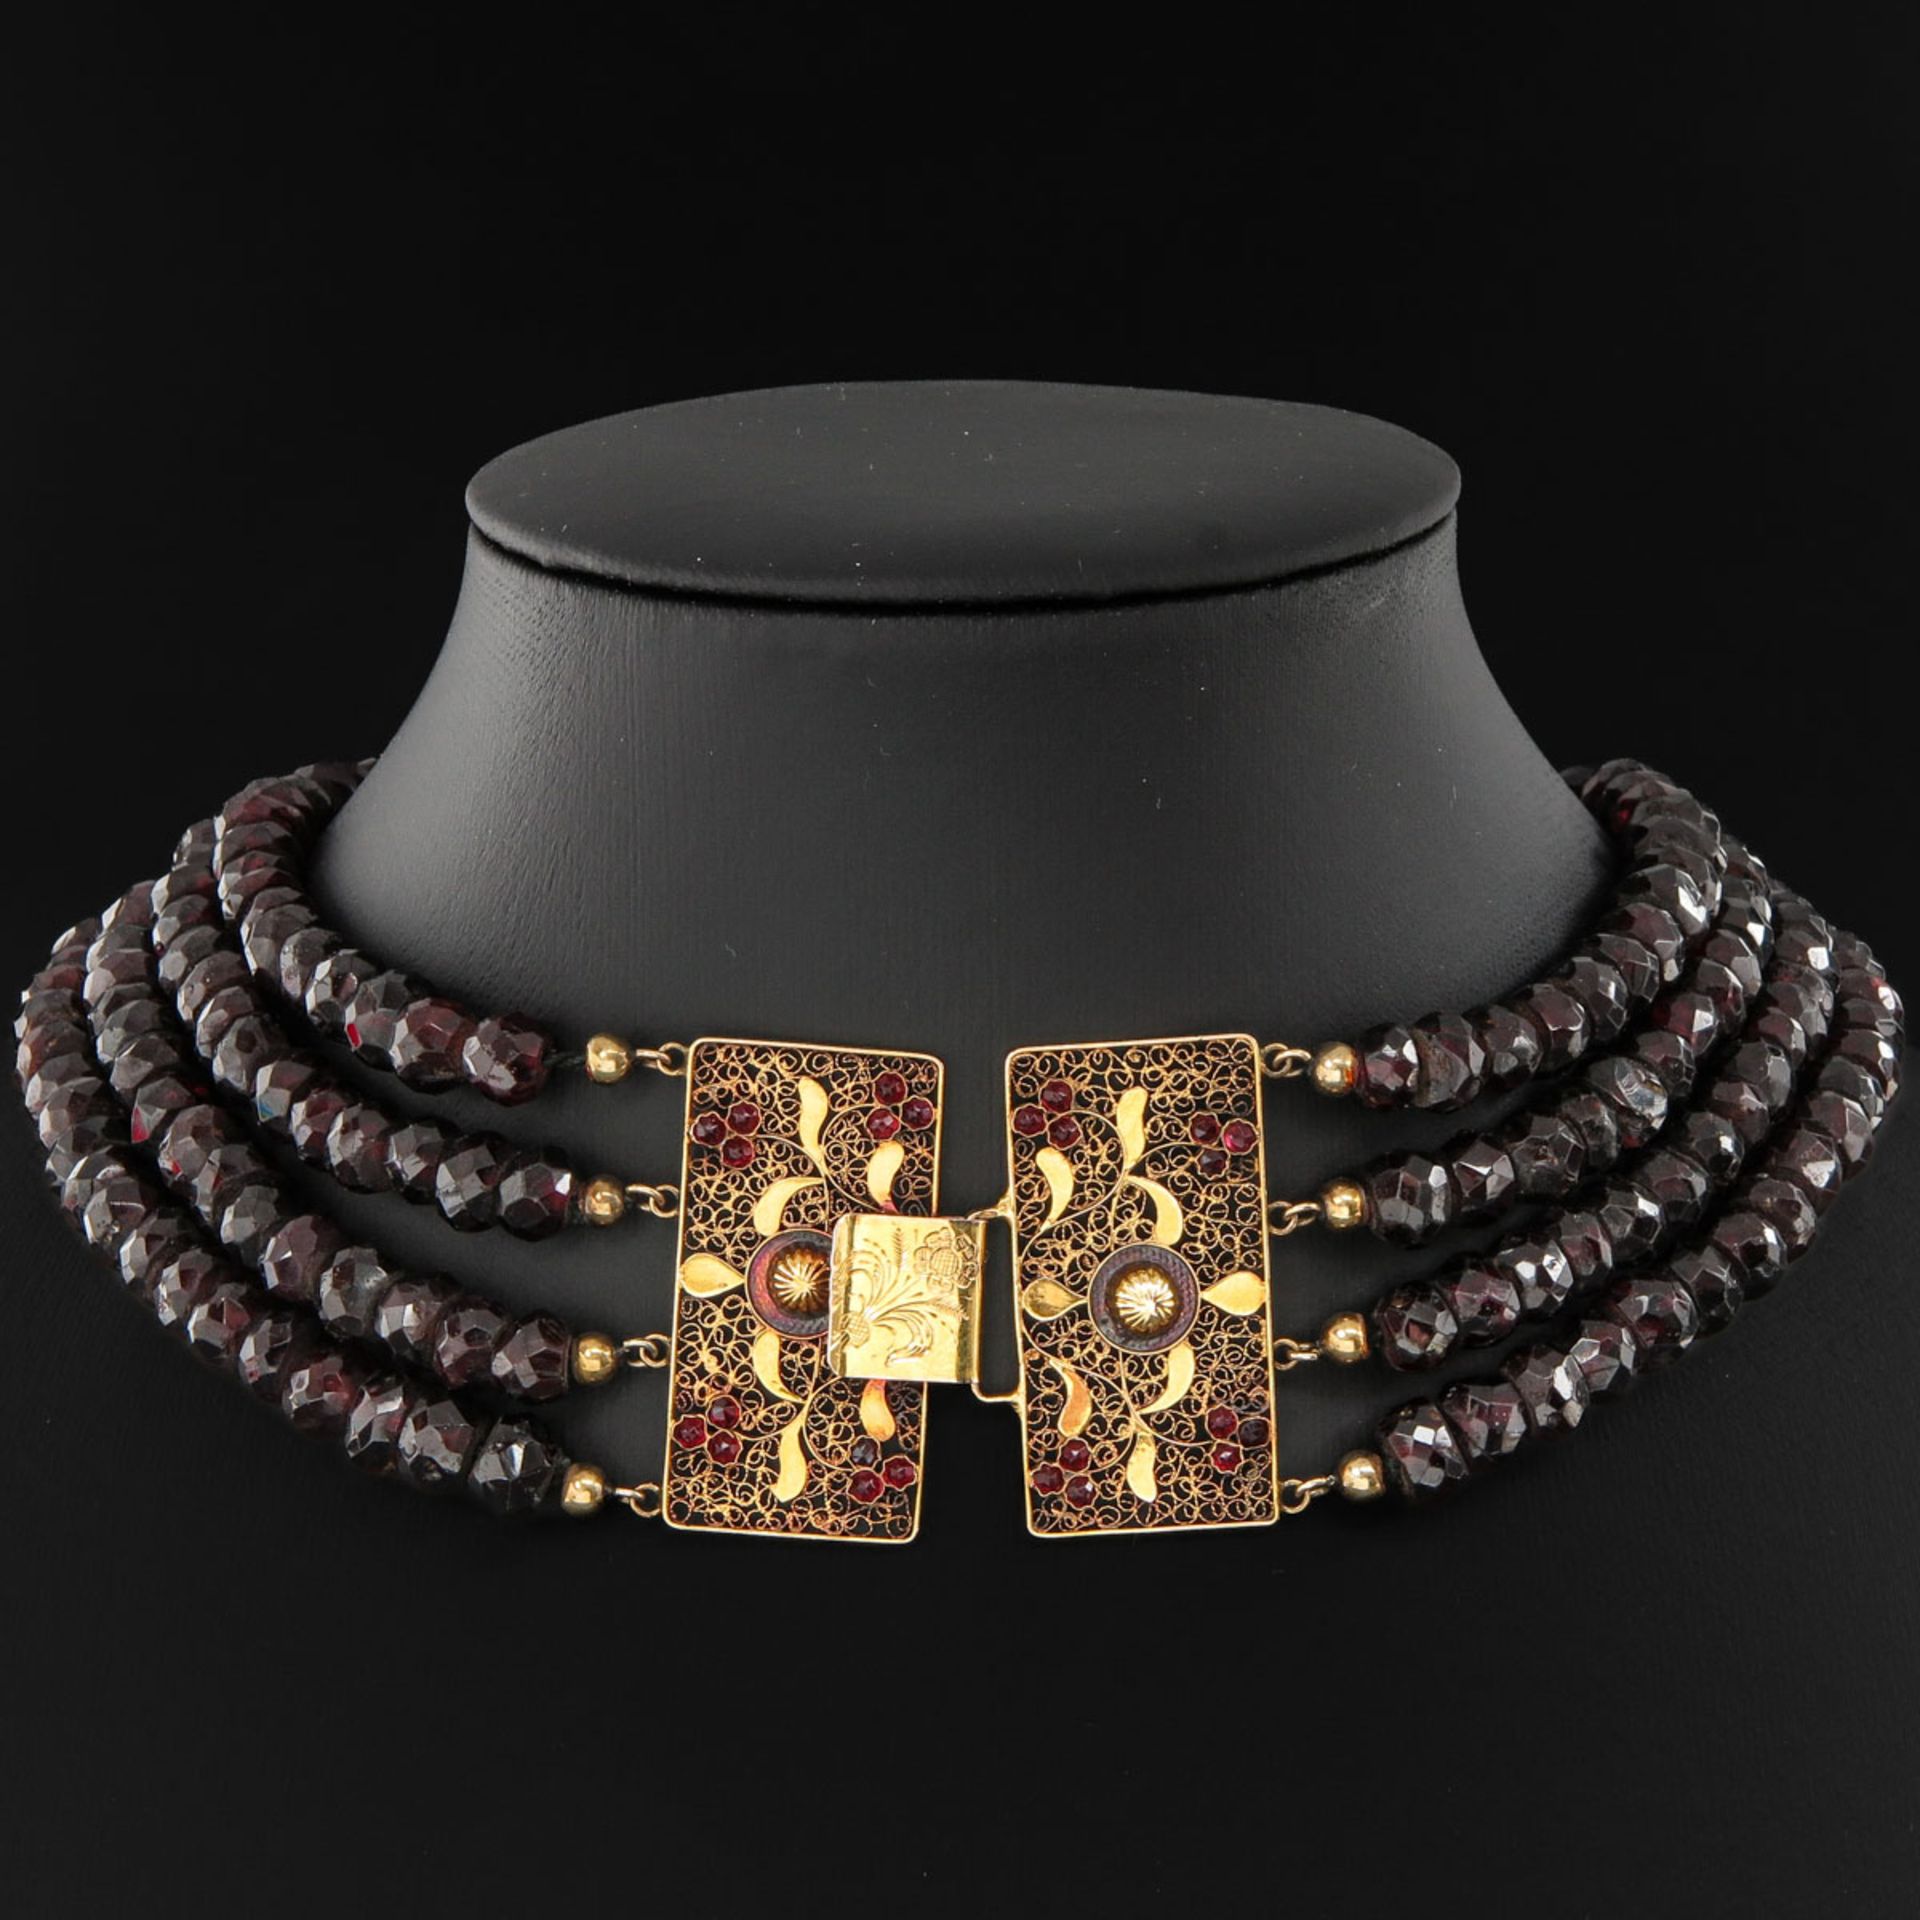 A Garnet Necklace